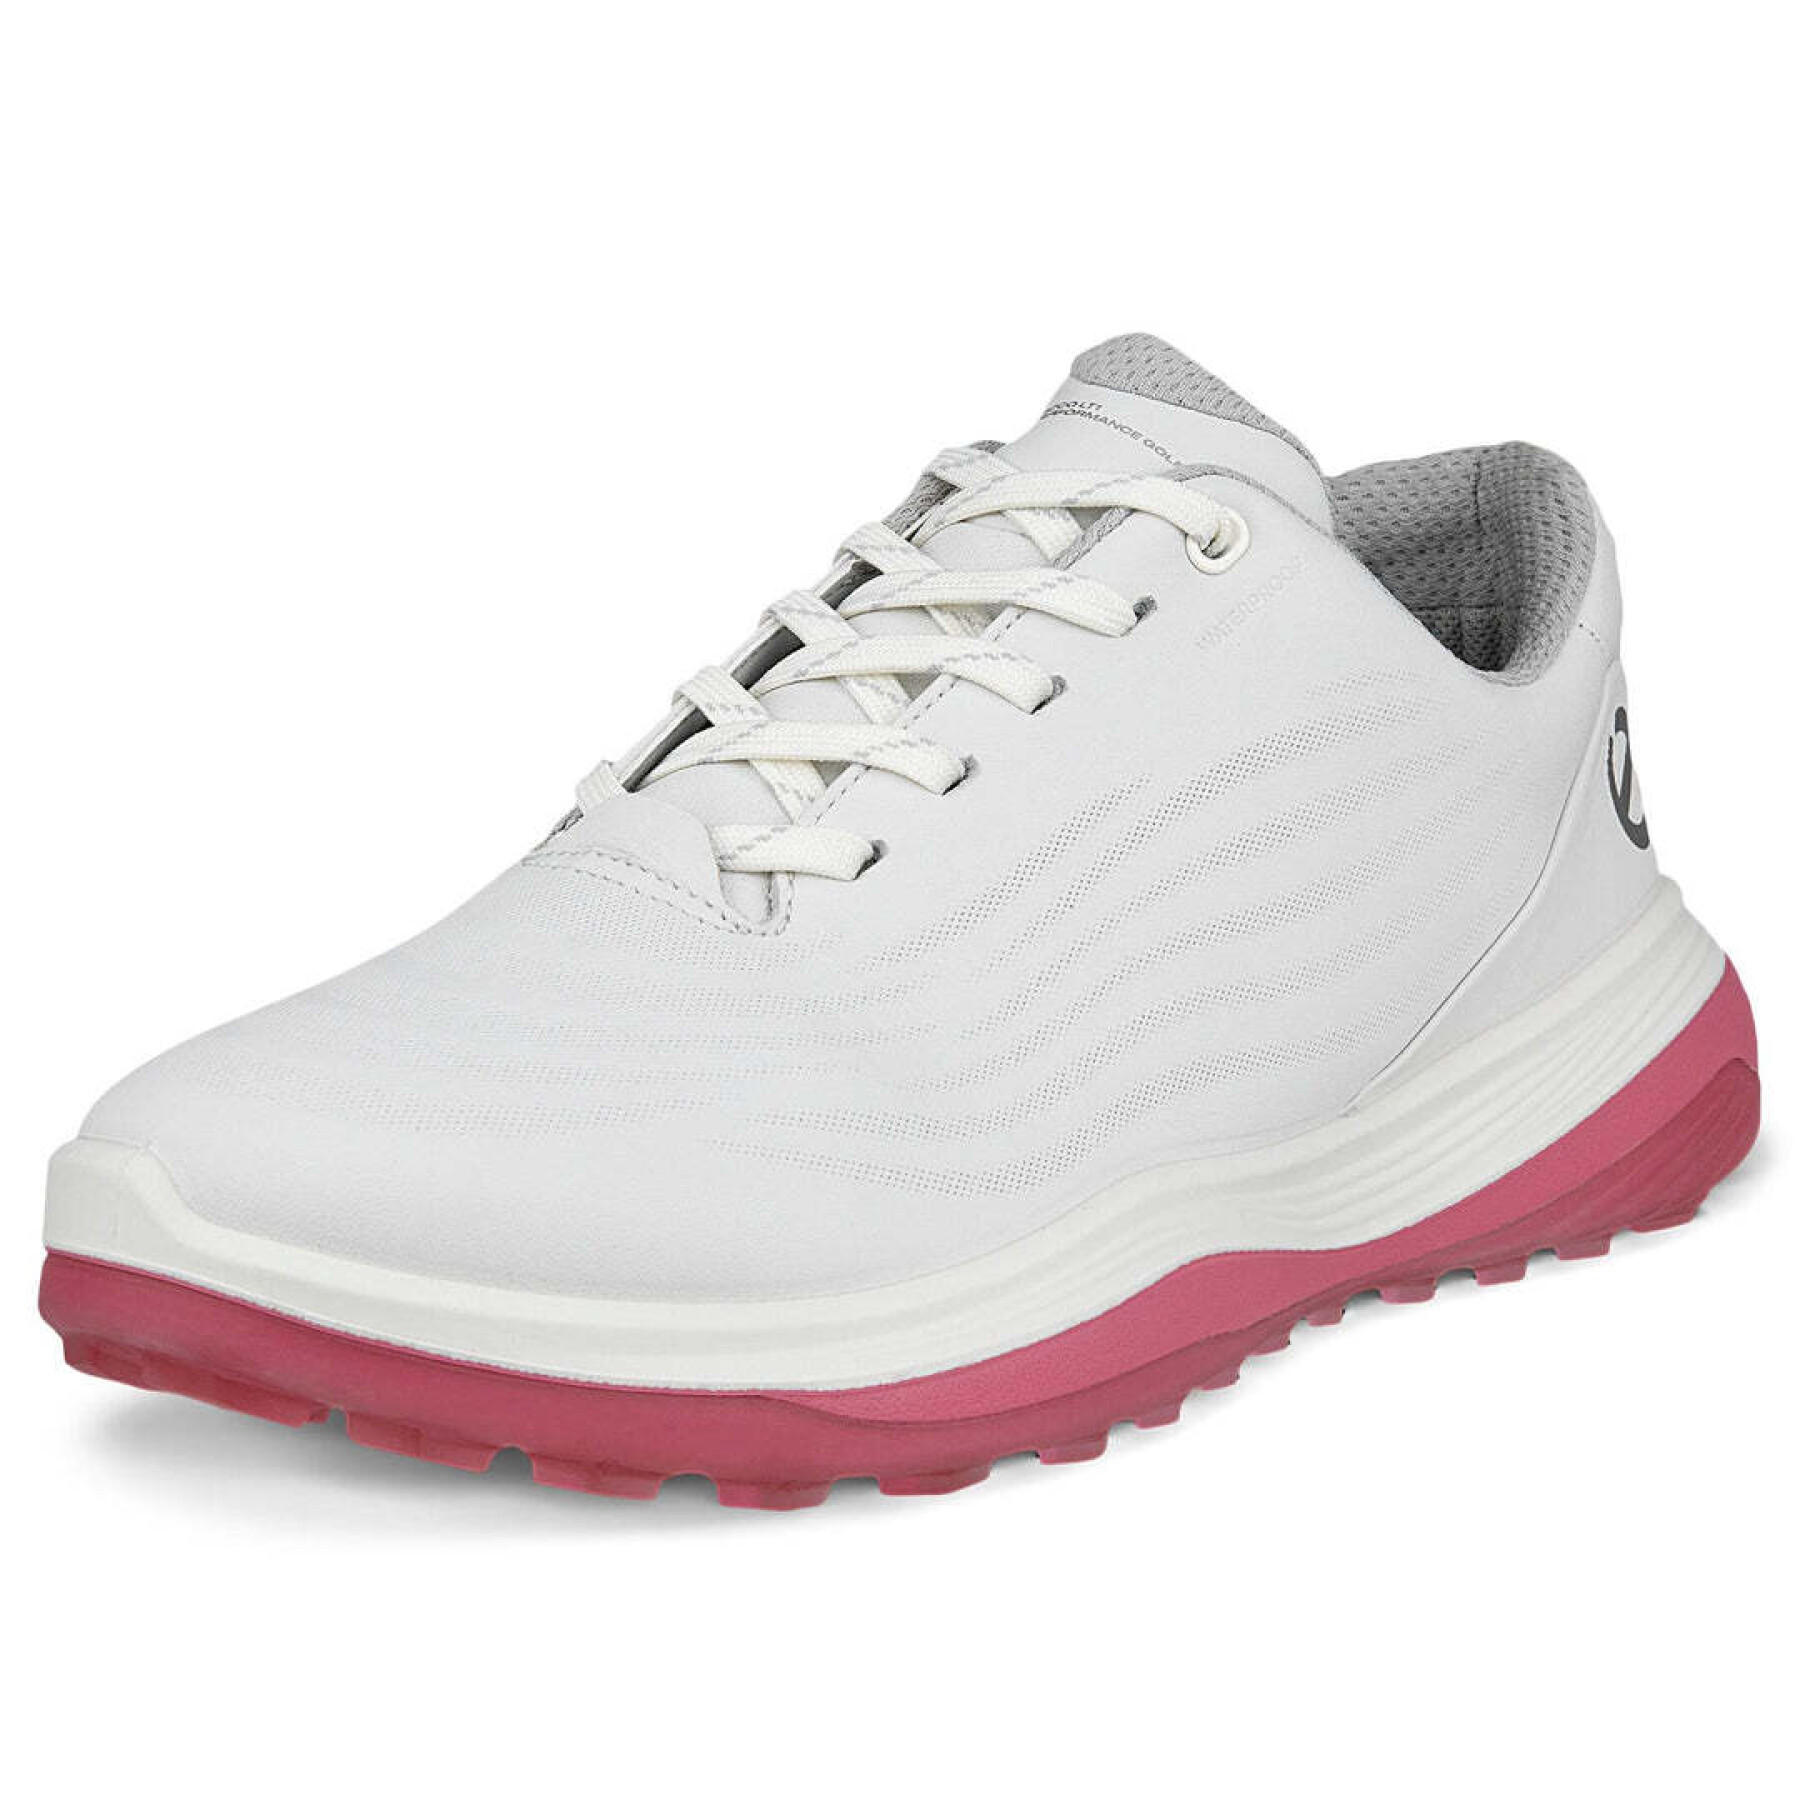 Chaussures de golf sans crampons femme Ecco LT1